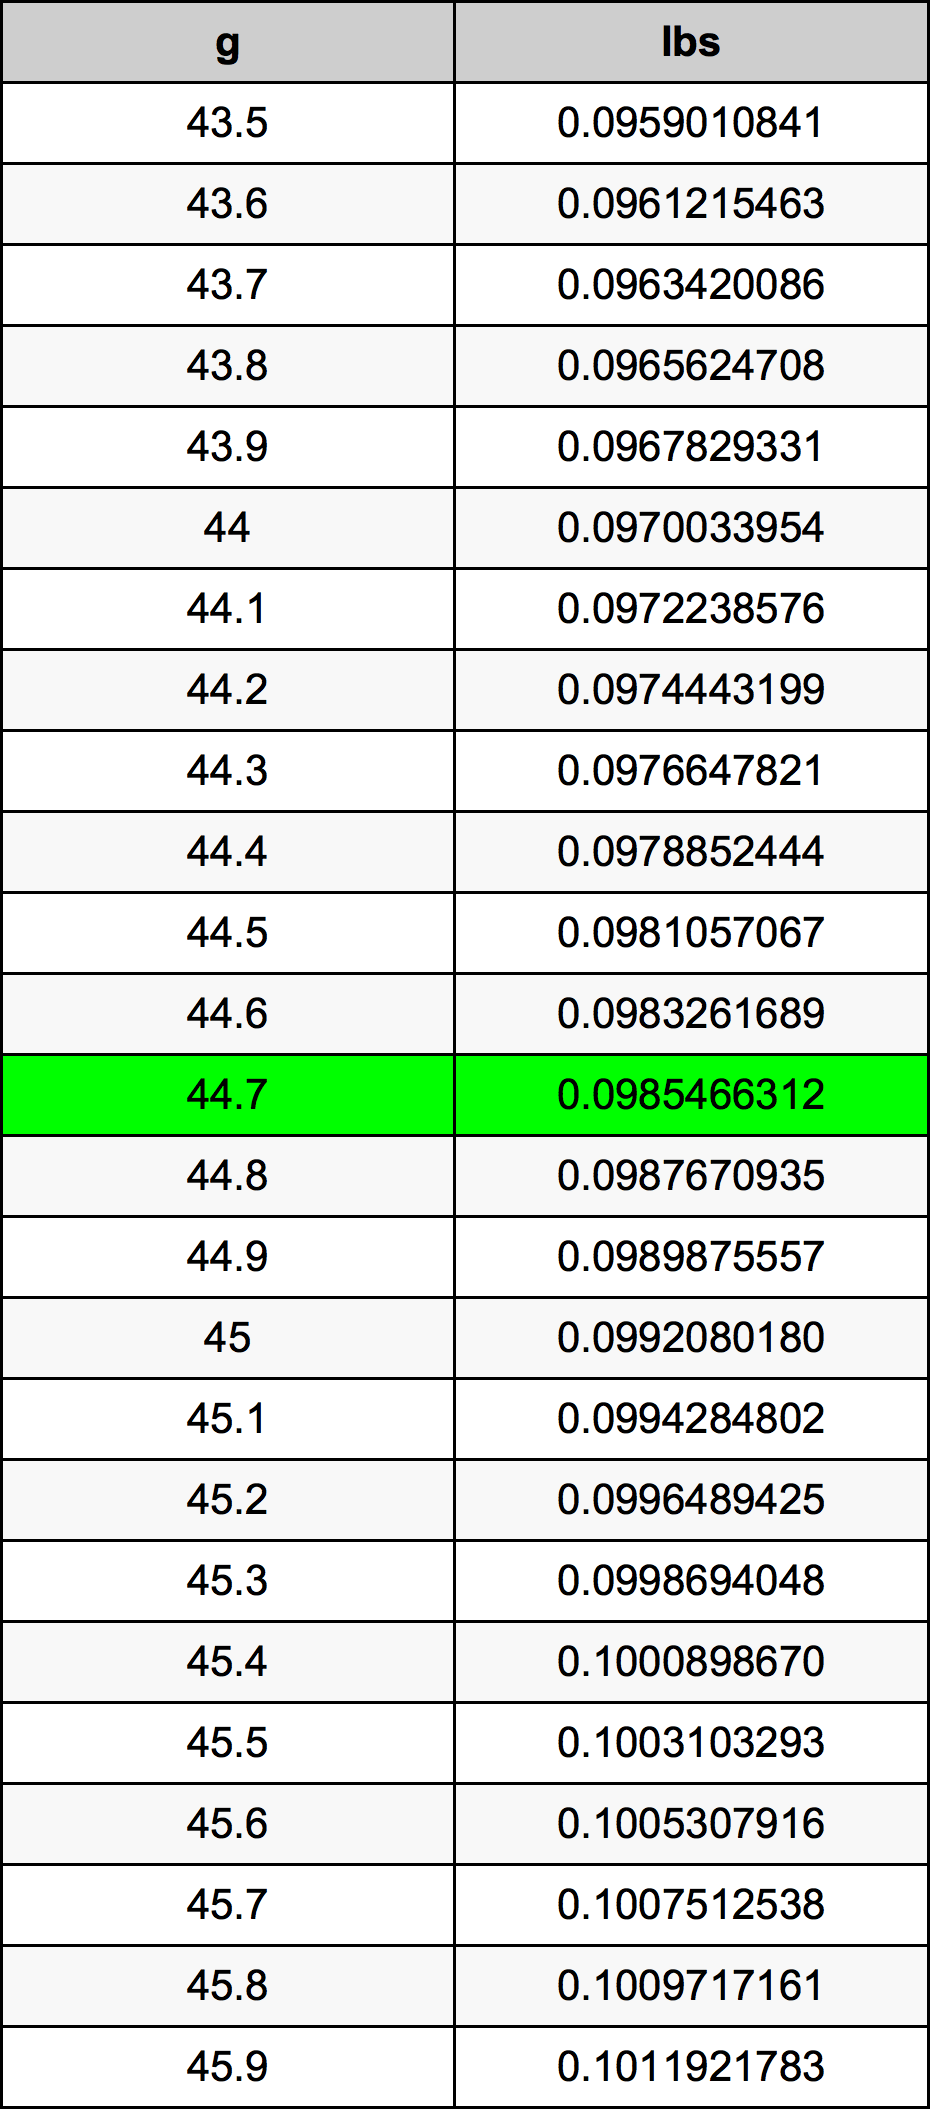 44.7 غرام جدول تحويل